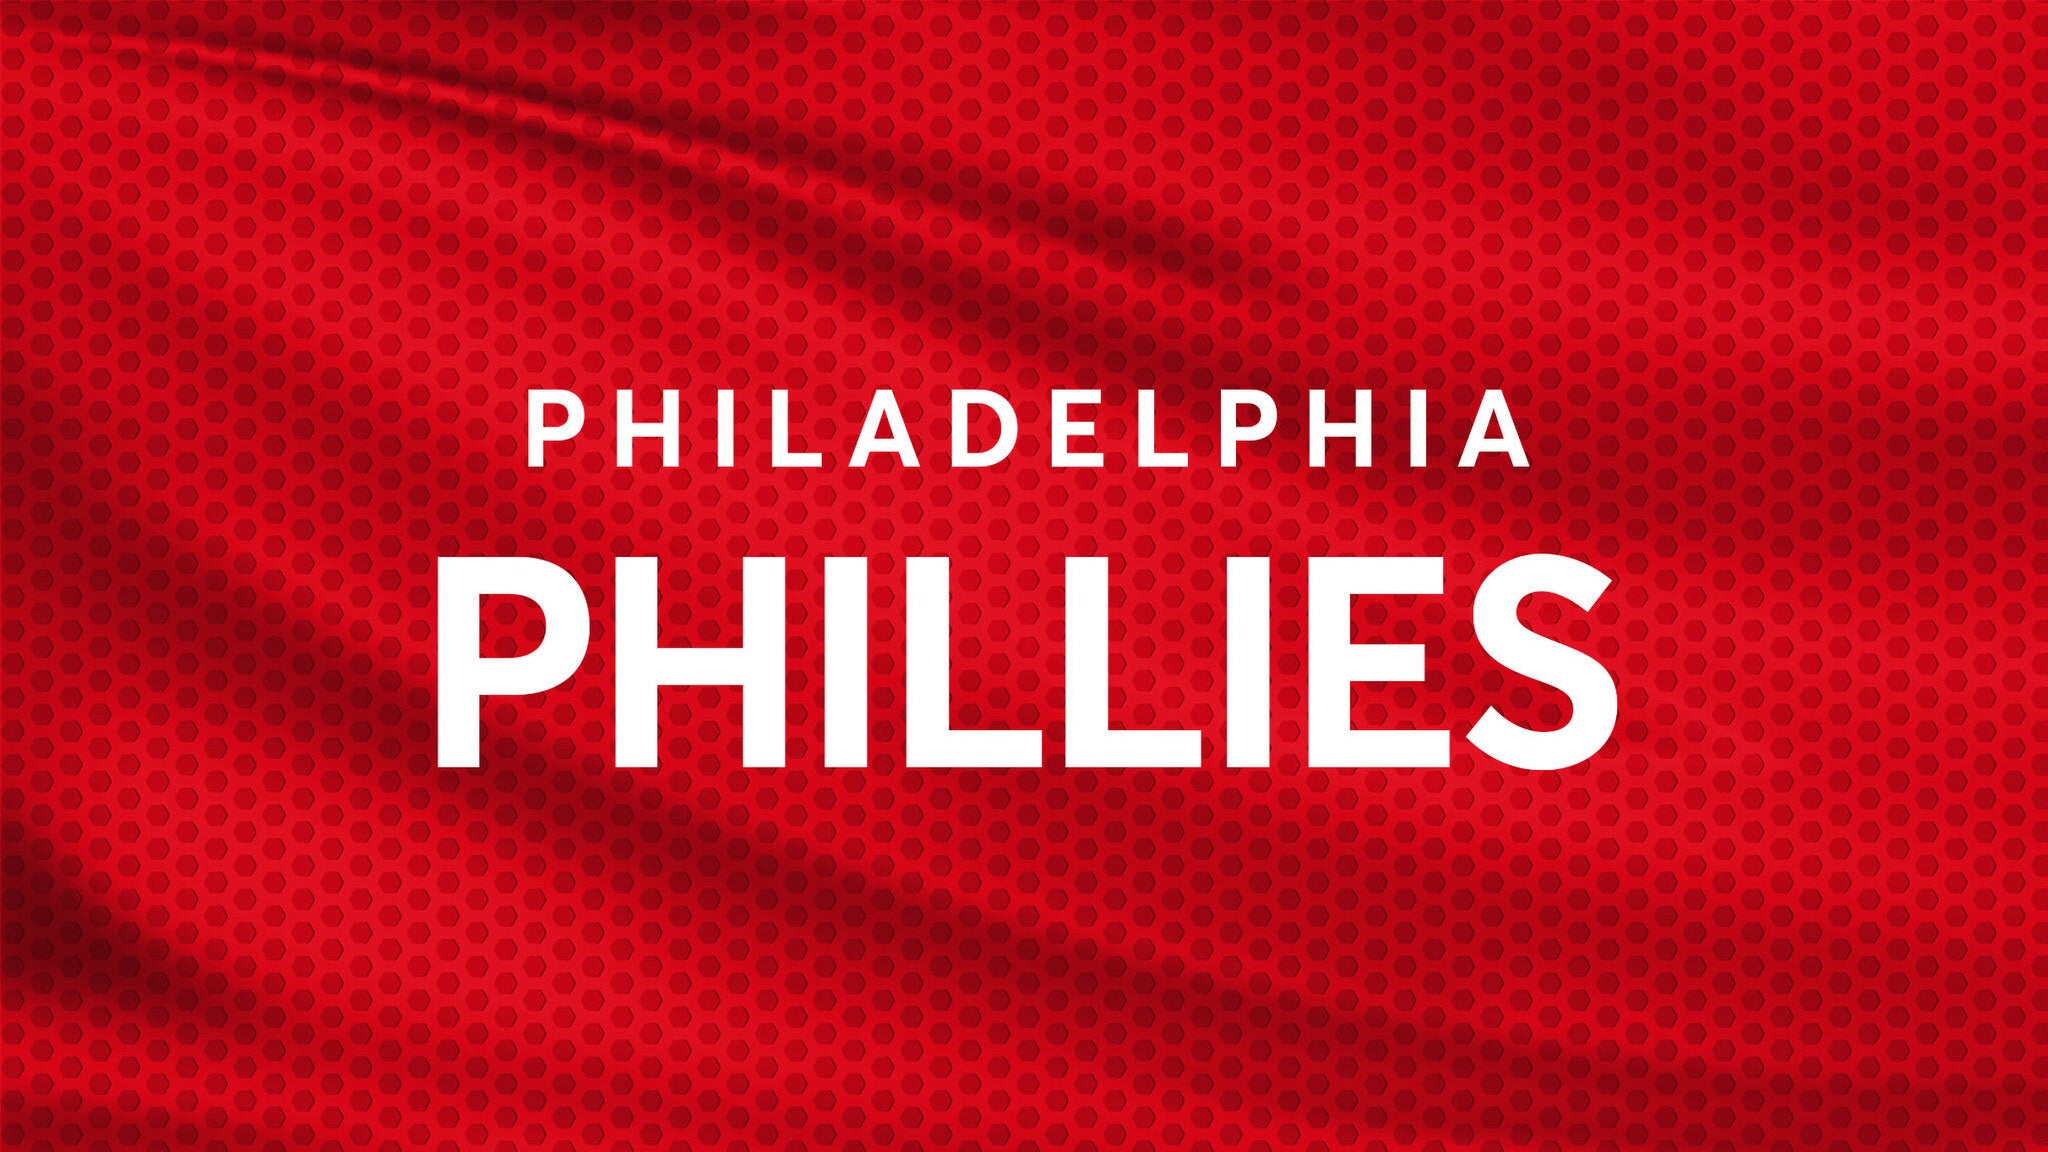 Philadelphia Phillies vs. Los Angeles Dodgers